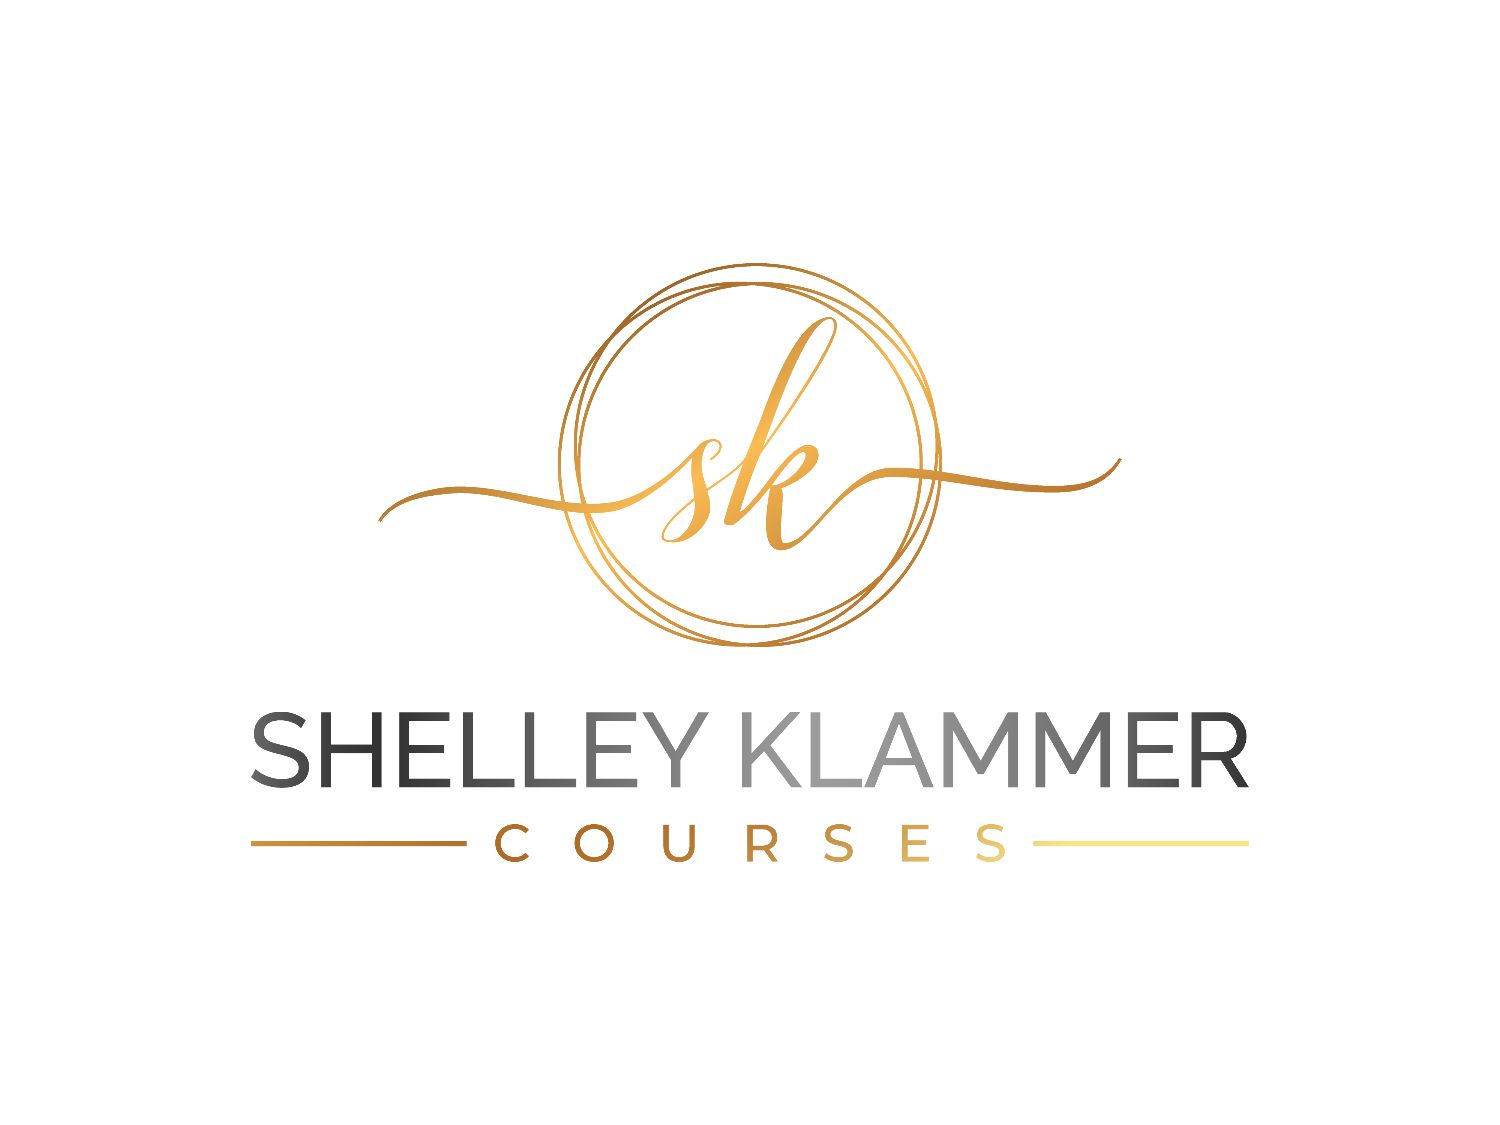 Shelley Klammer Courses